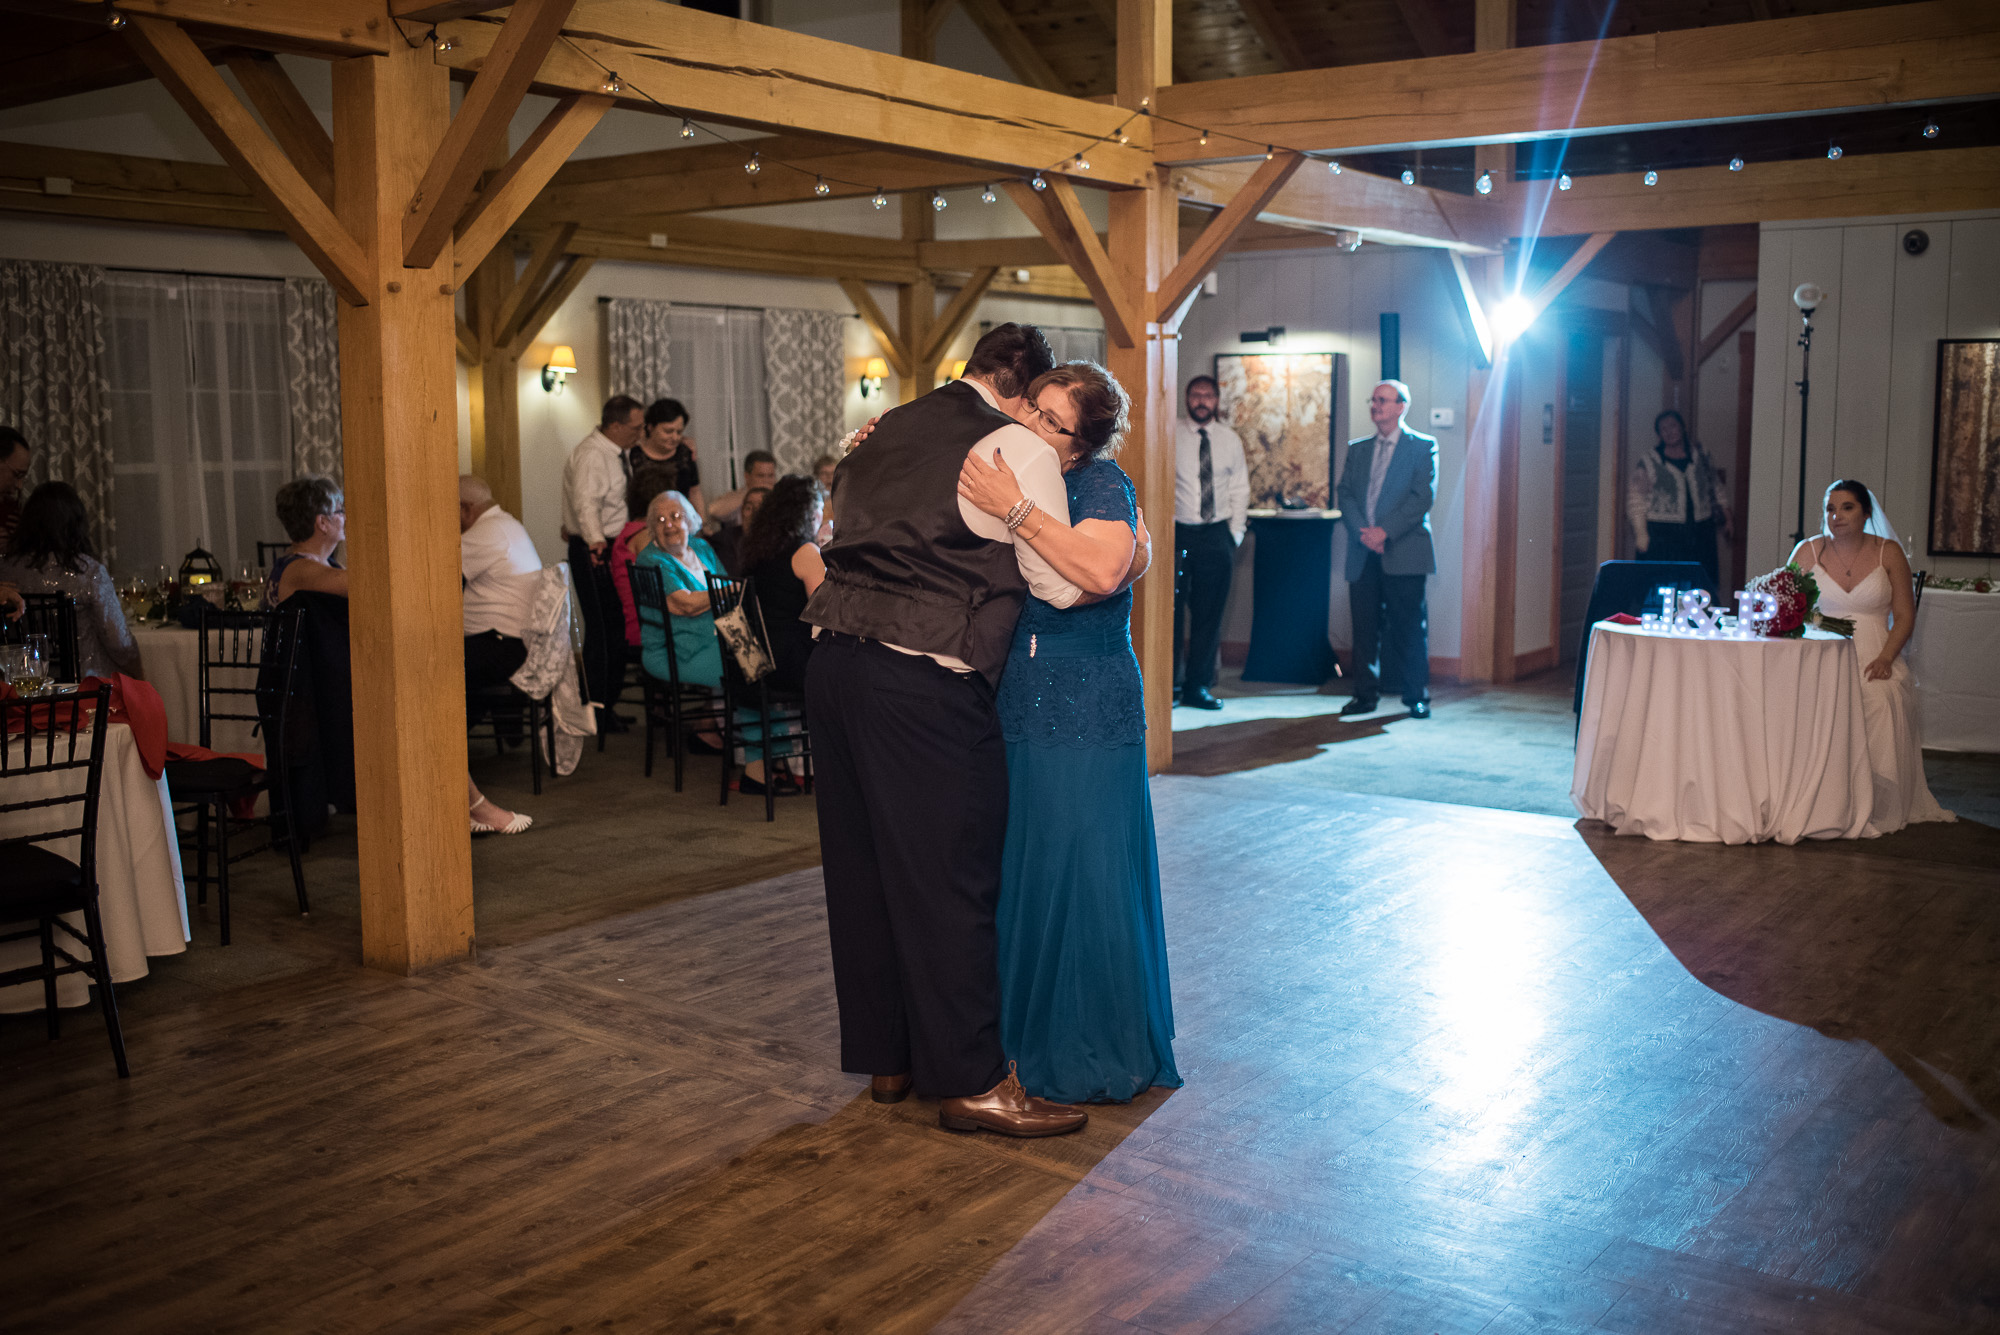 parent dances during a wedding reception at barn wedding venue